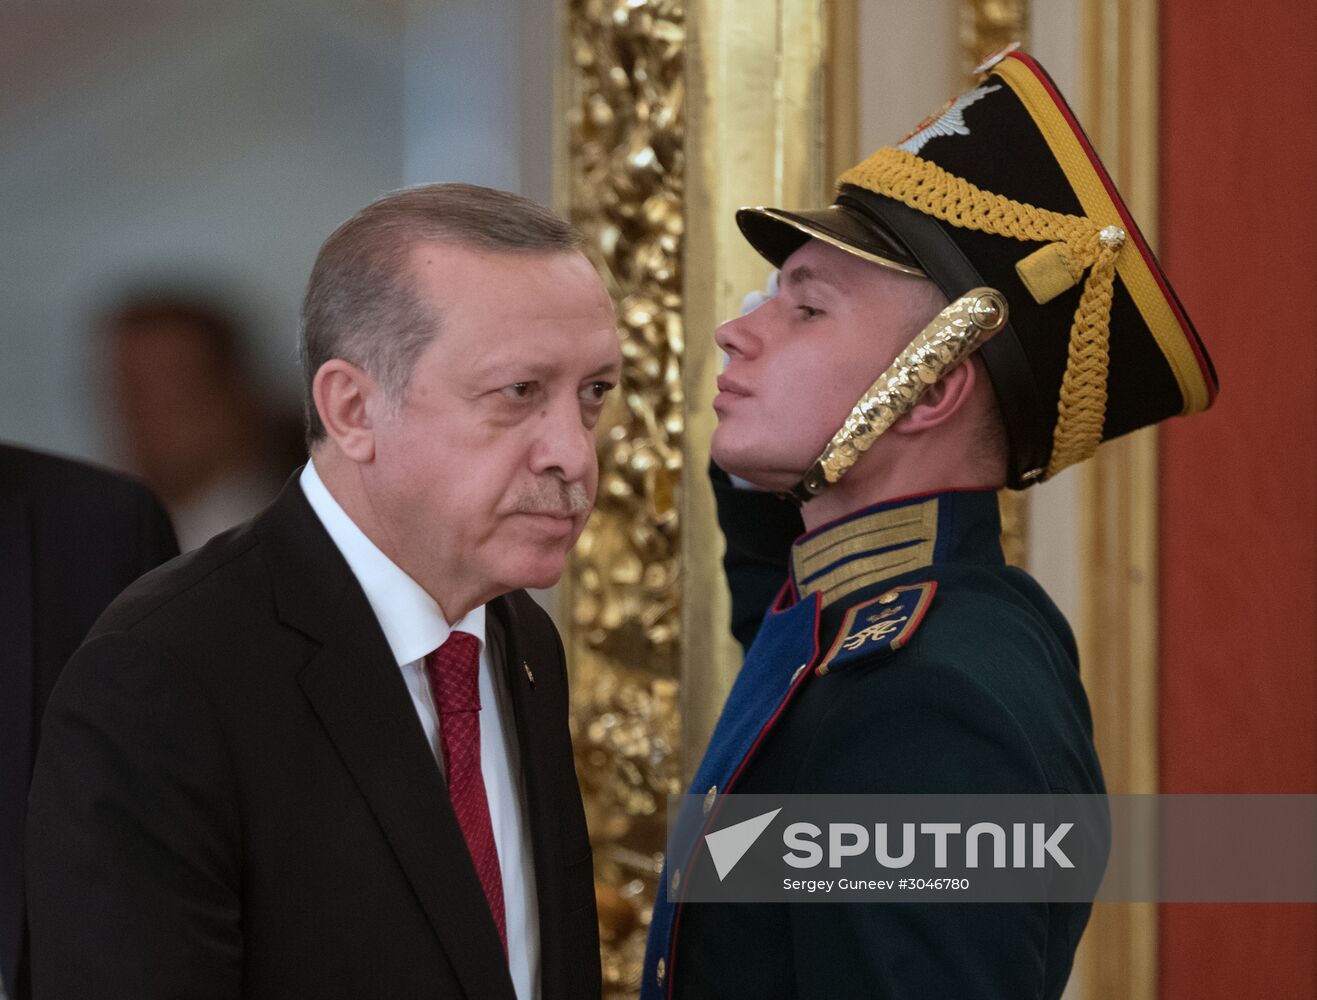 President Vladimir Putin takes part in Russian-Turkish Cooperation Council meeting